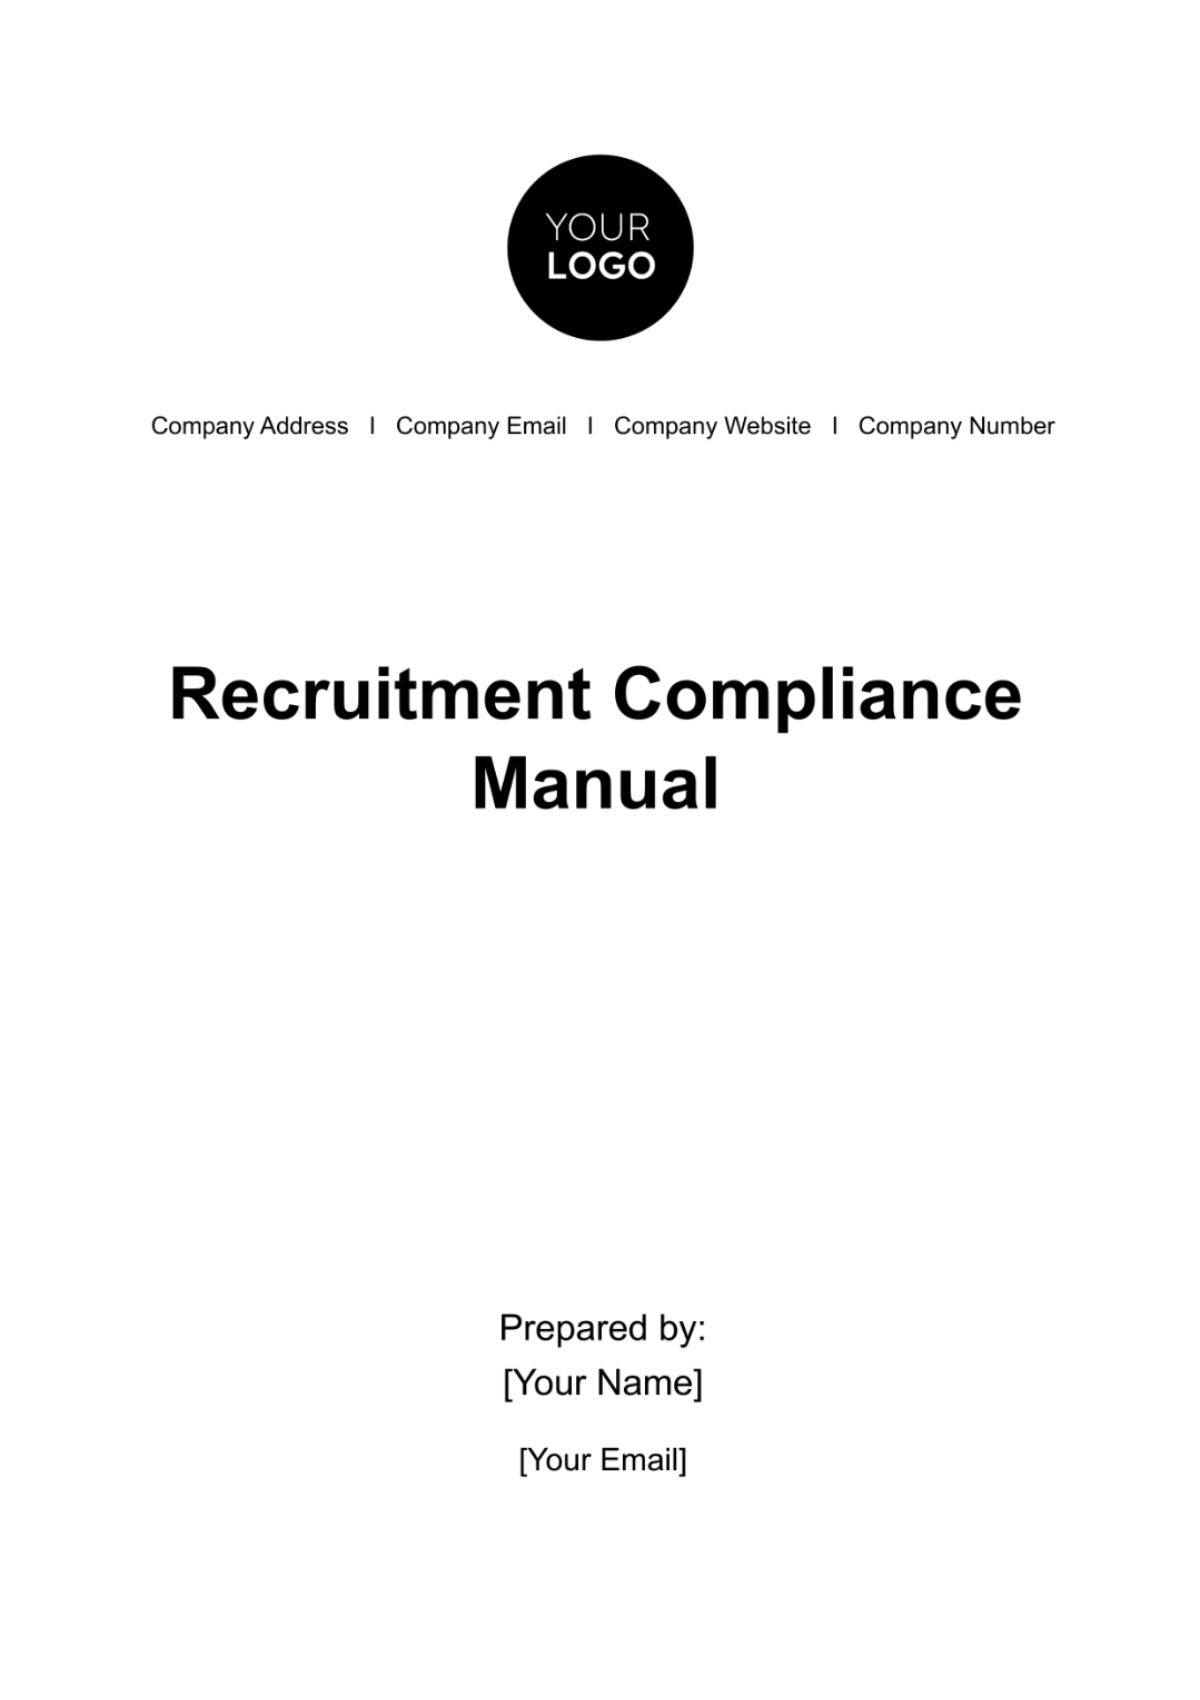 Free Recruitment Compliance Manual HR Template